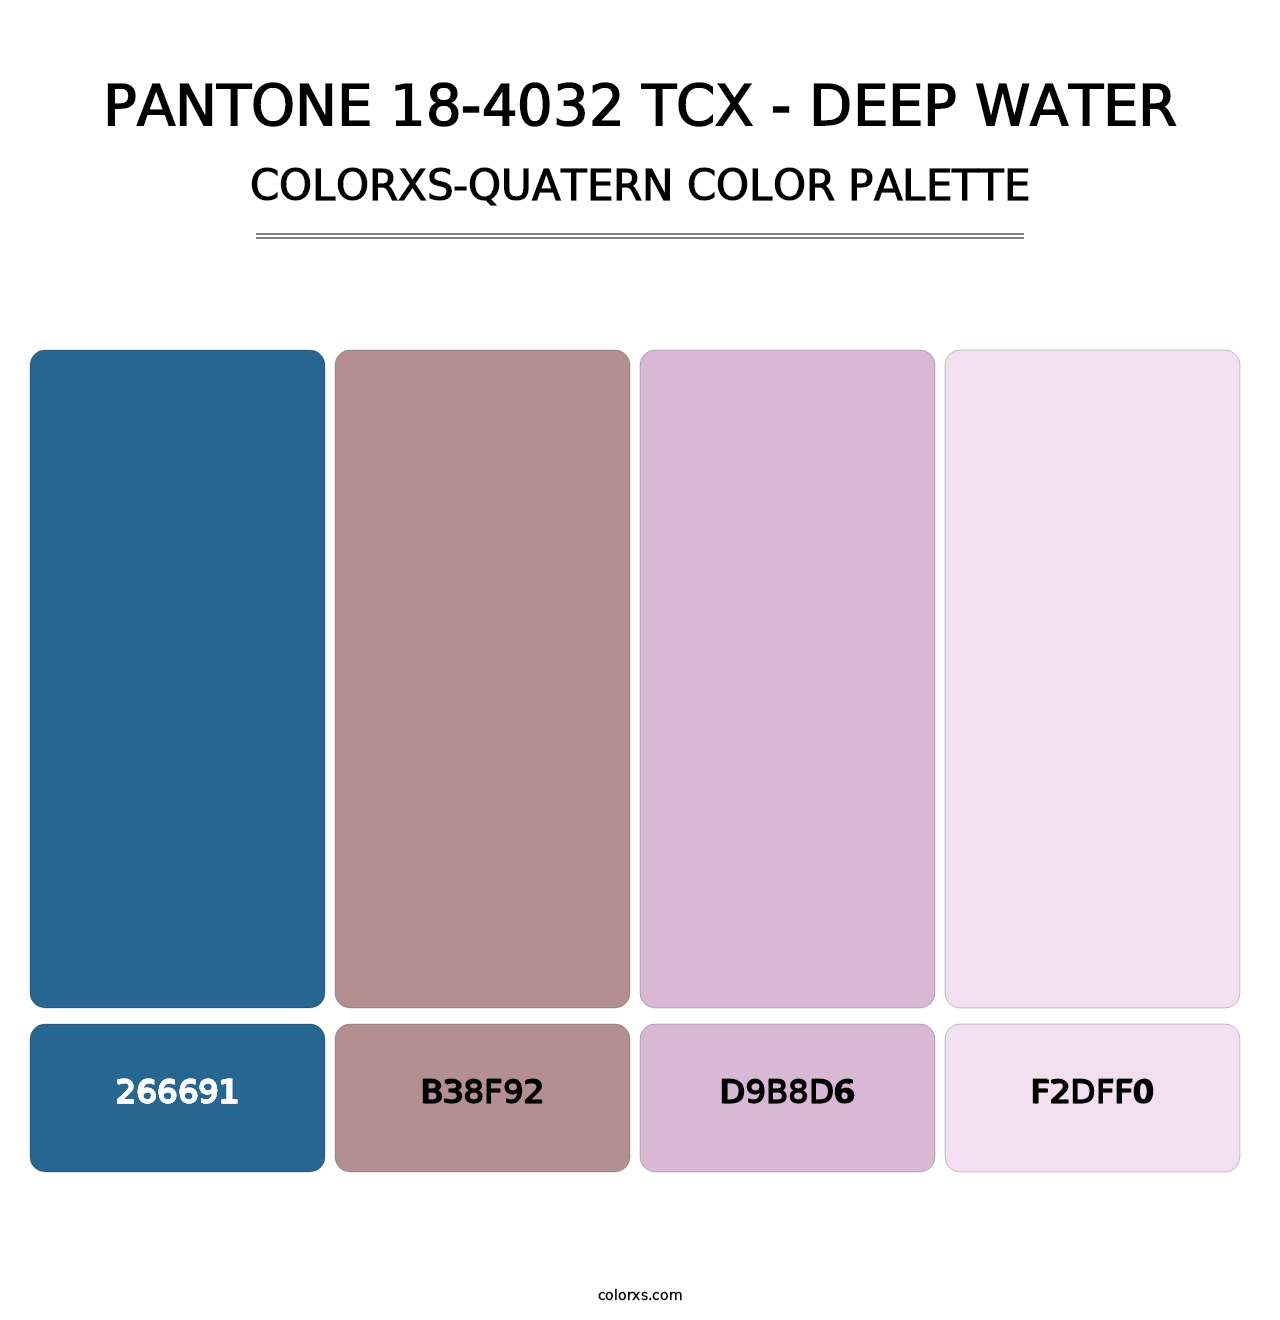 PANTONE 18-4032 TCX - Deep Water - Colorxs Quatern Palette